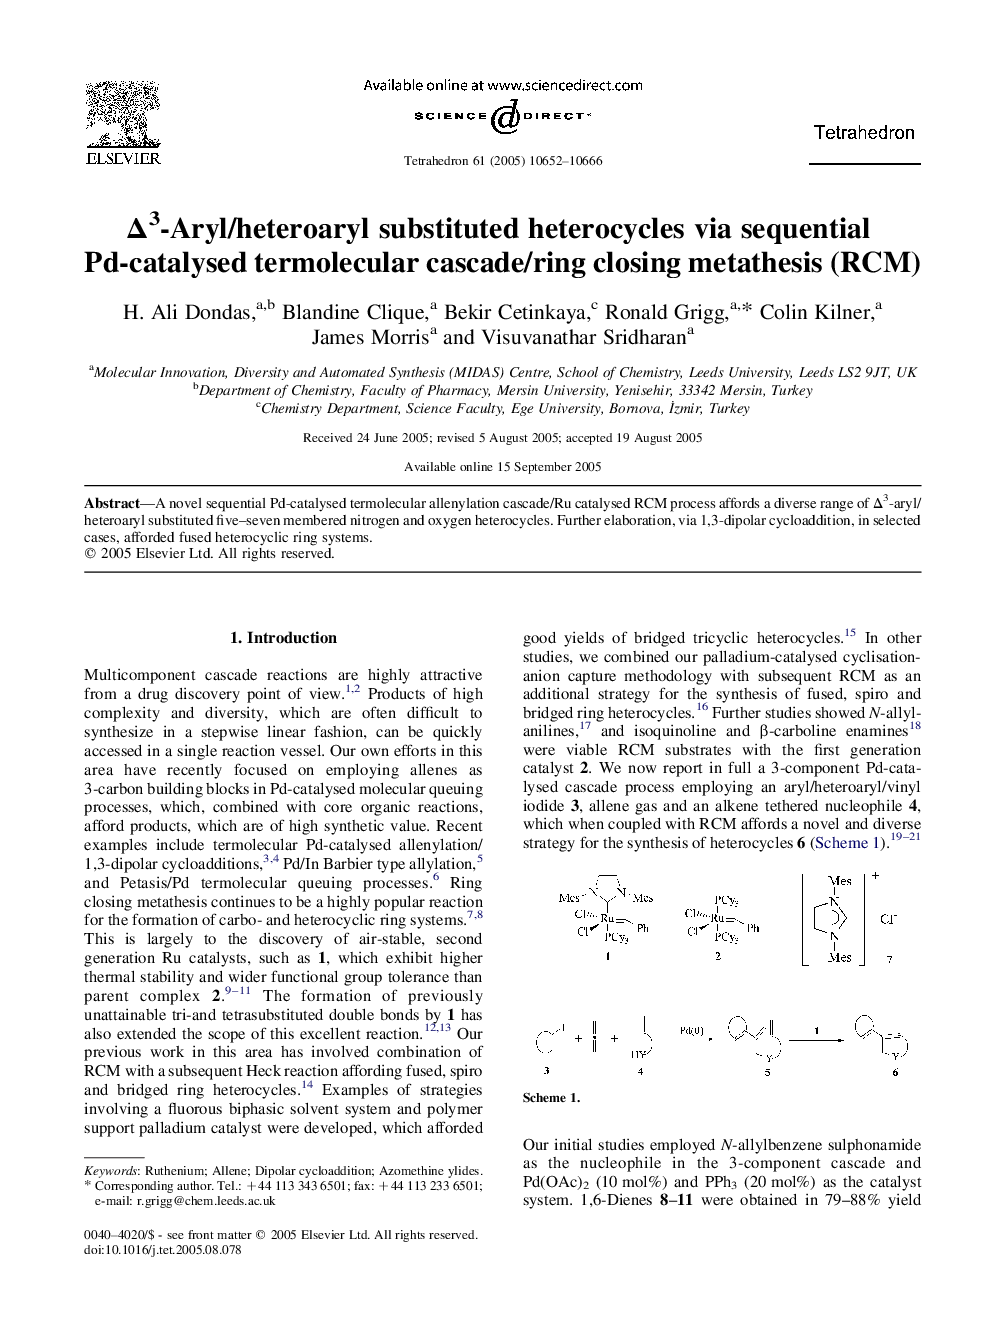 Î3-Aryl/heteroaryl substituted heterocycles via sequential Pd-catalysed termolecular cascade/ring closing metathesis (RCM)